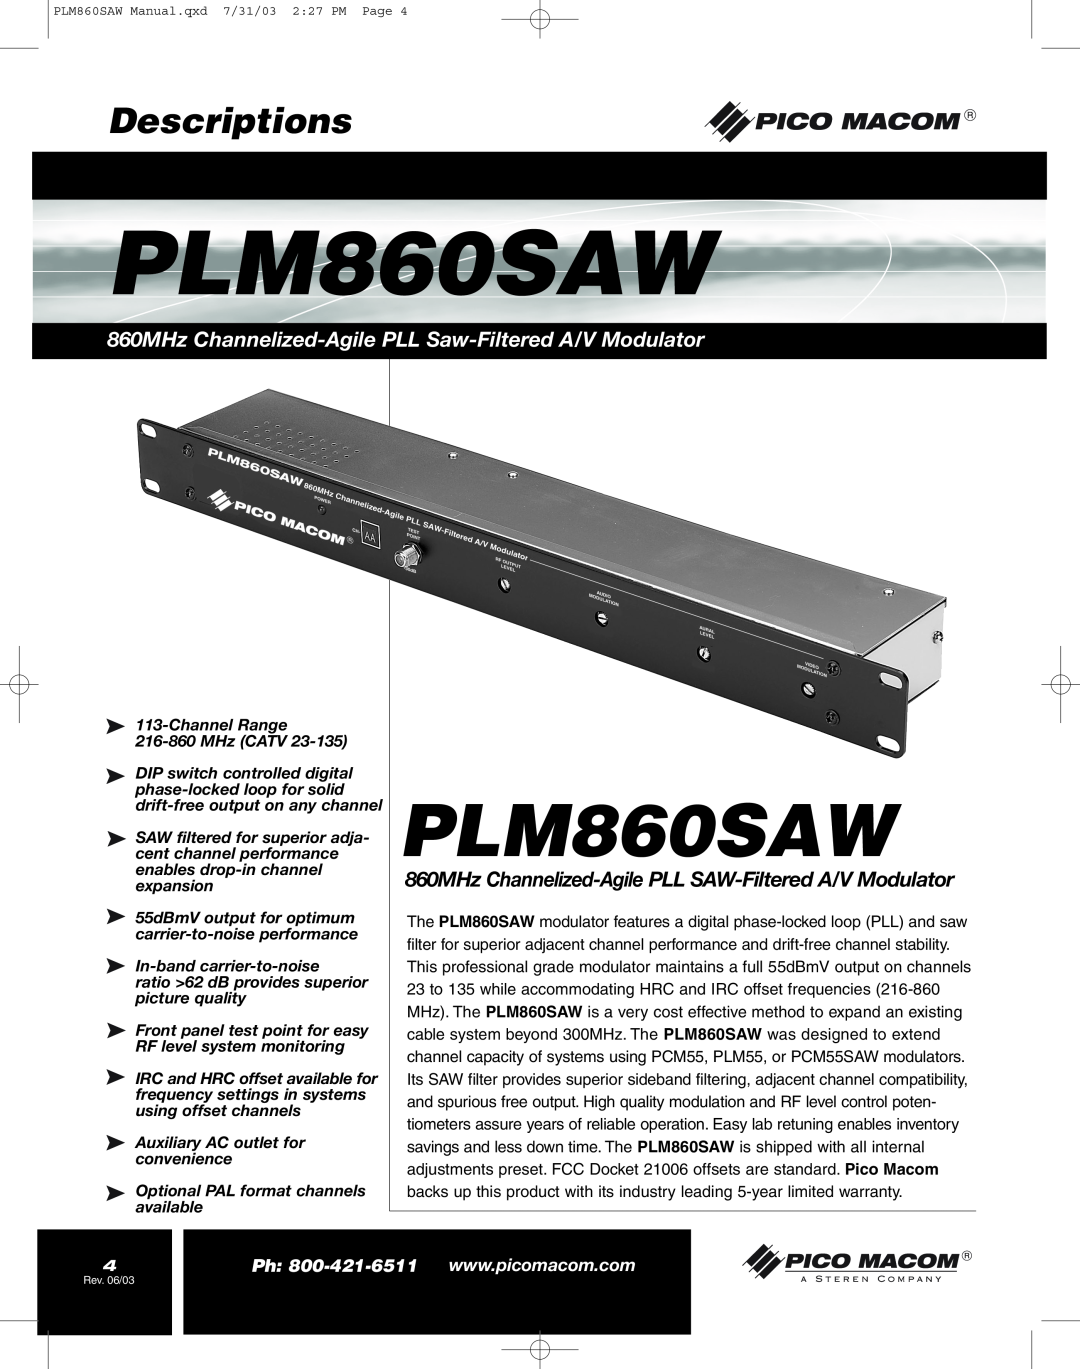 Pico Macom PFAM860SAW operation manual Descriptions, PLM860SAW 